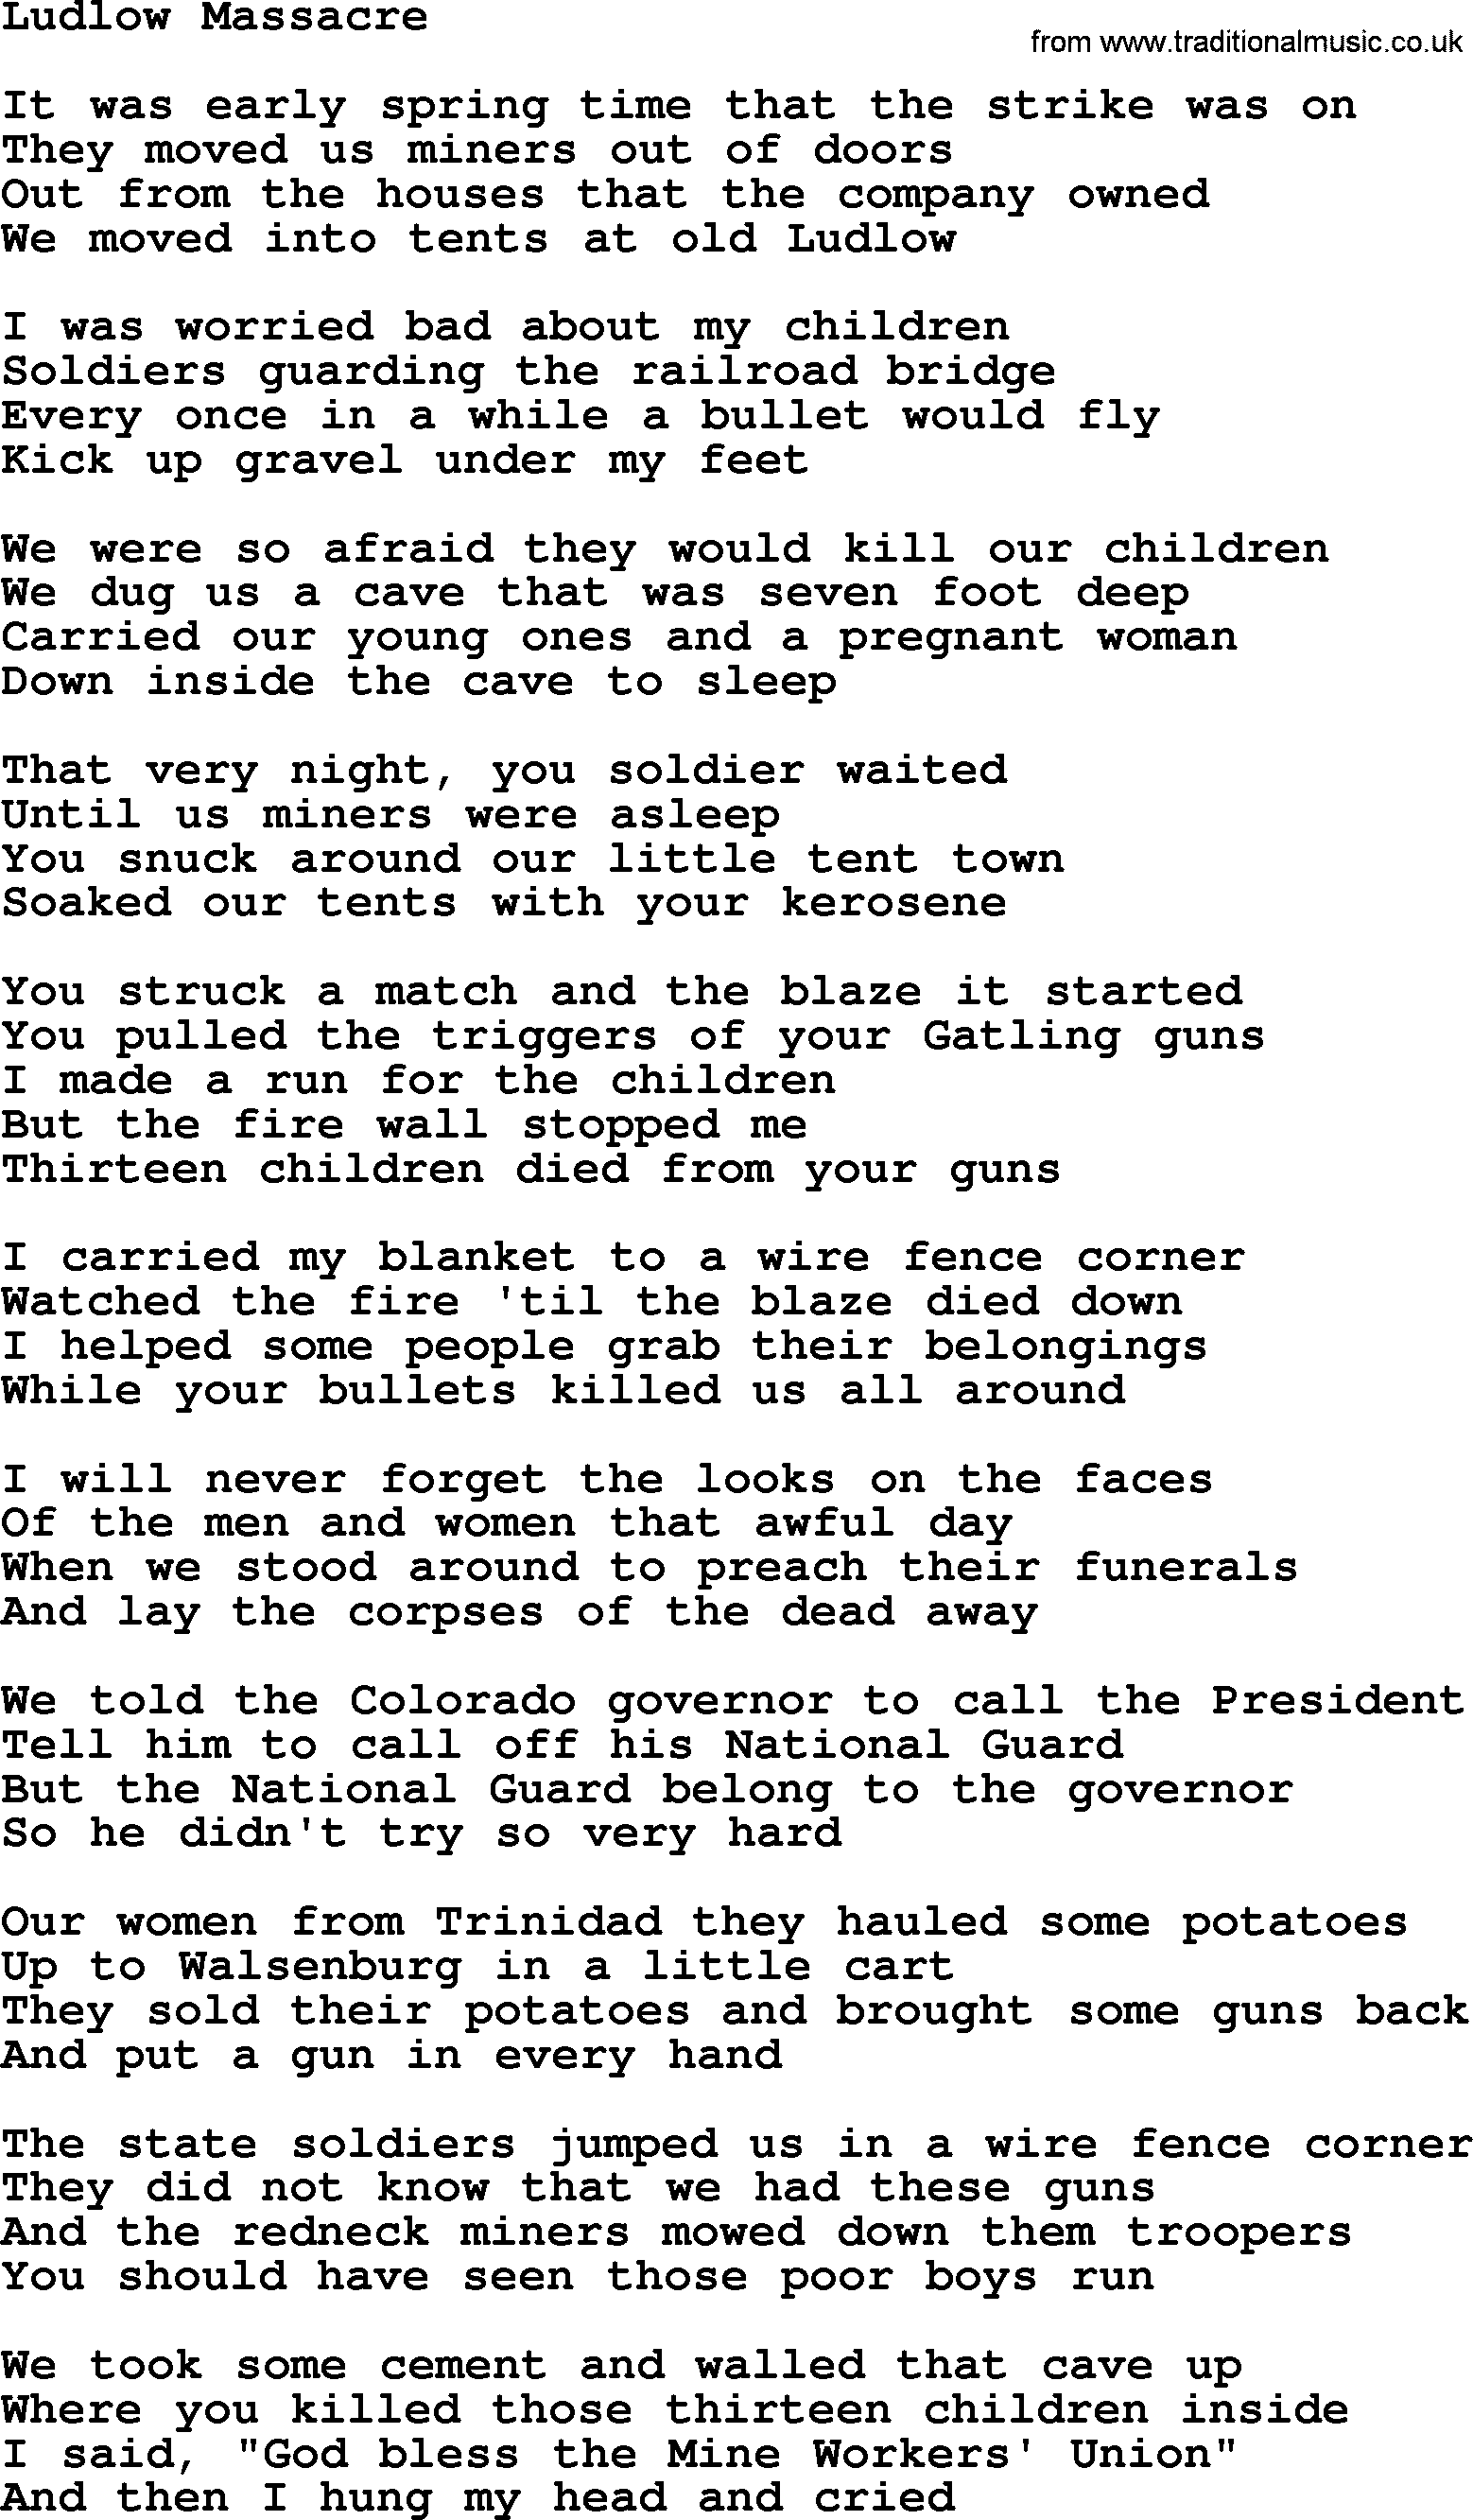 Woody Guthrie song Ludlow Massacre lyrics